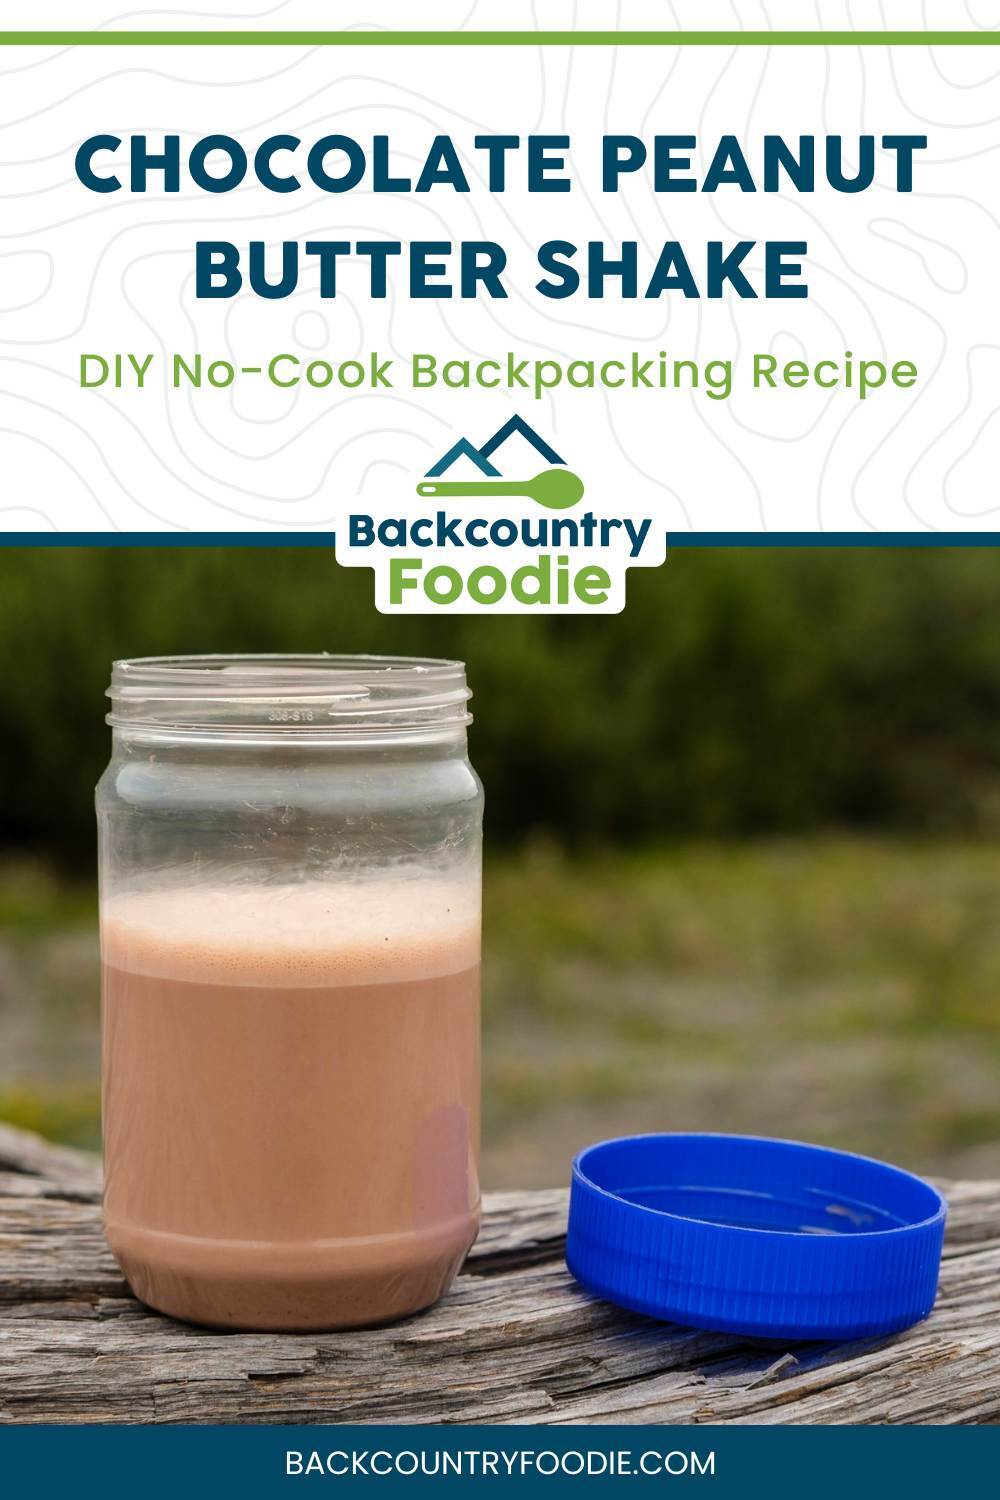 Chocolate peanut butter shake in a plastic jar